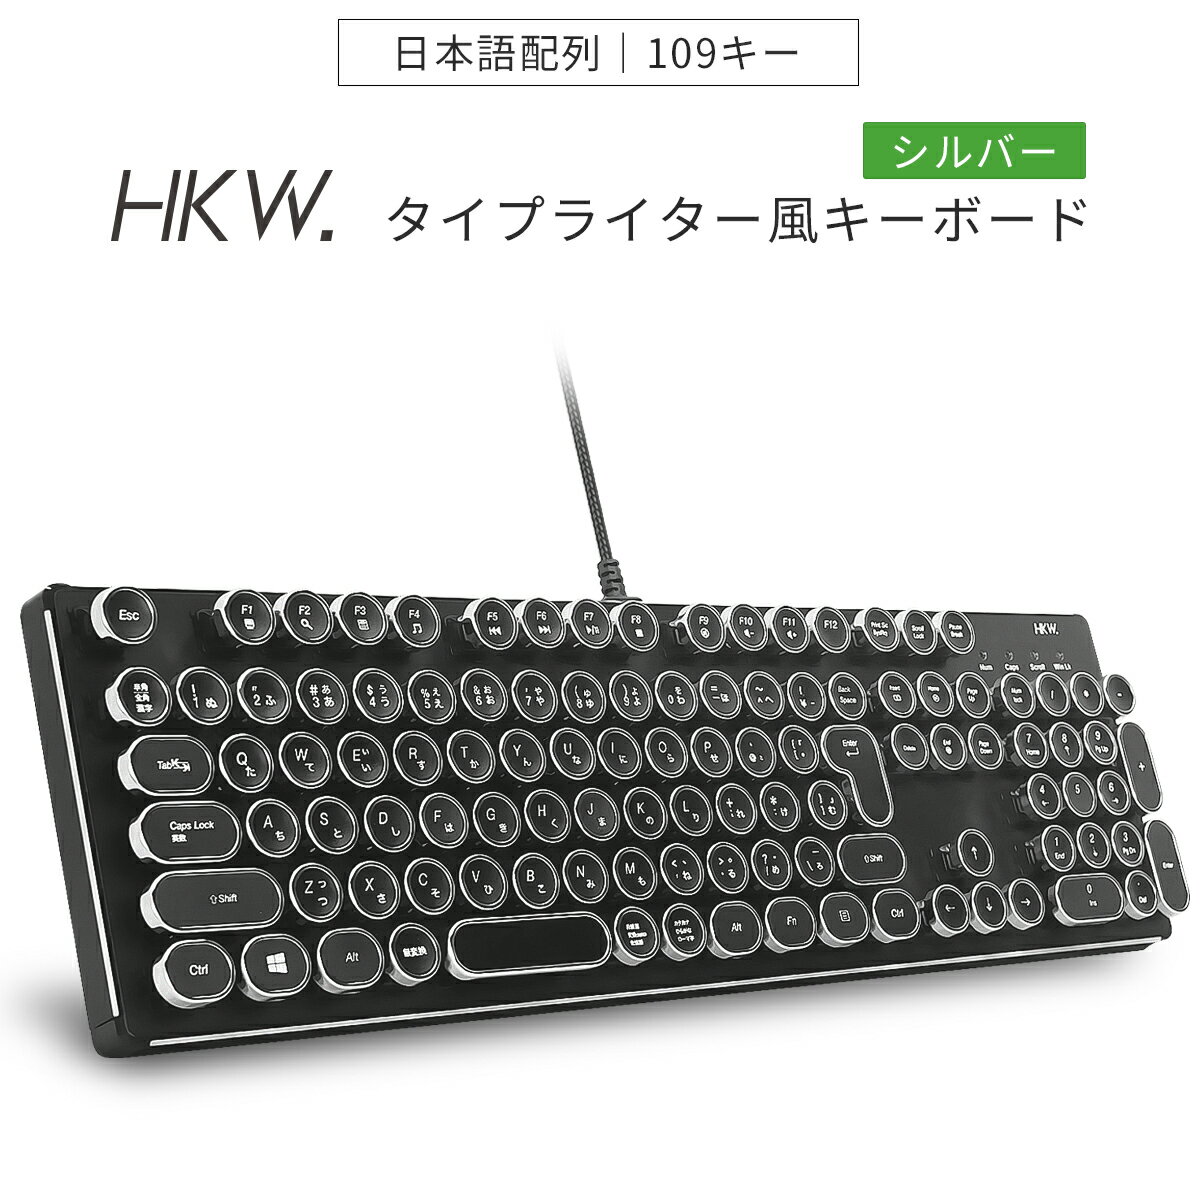 HKW タイプライター風メカニカルキーボード